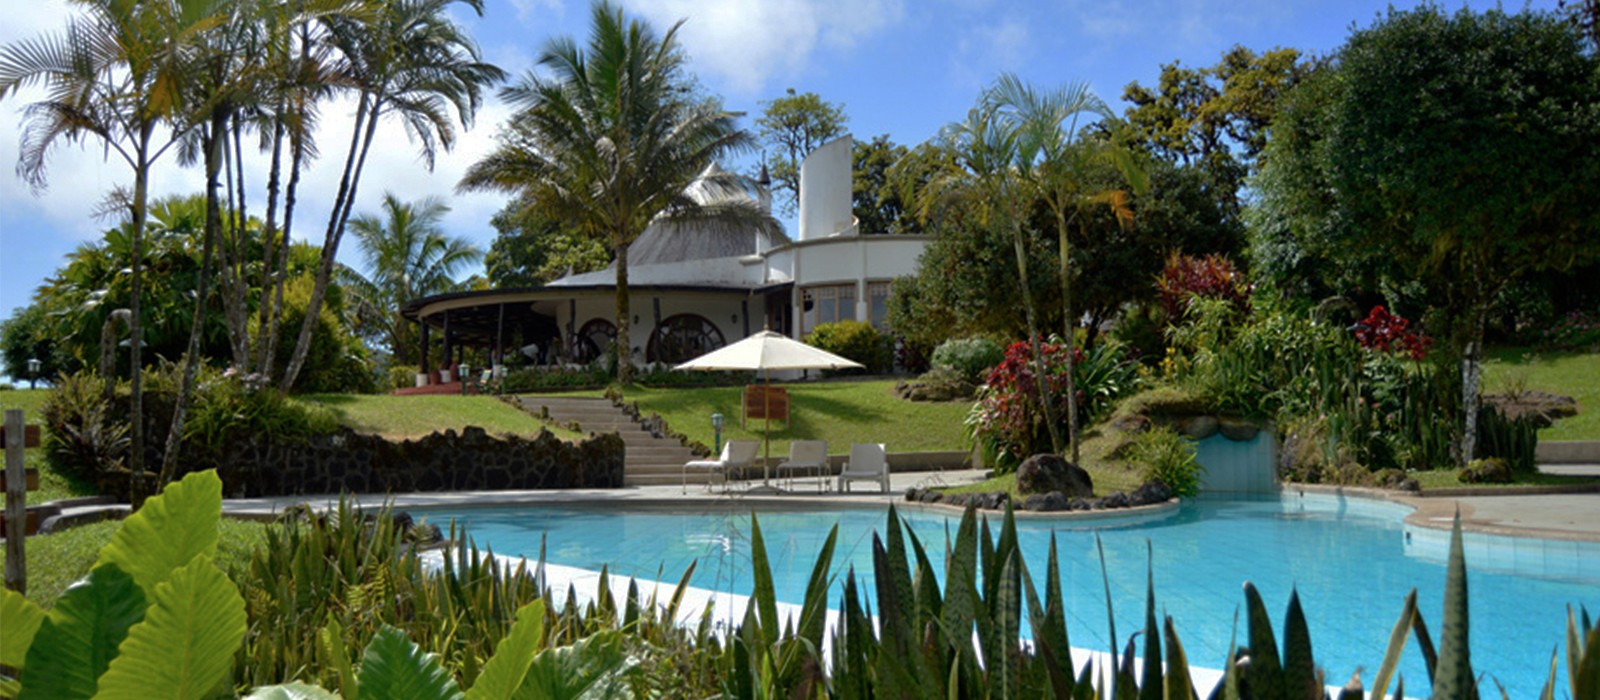 header - Royal Palm Hotel Galapagos - Luxury Galapagos Holiday Packages